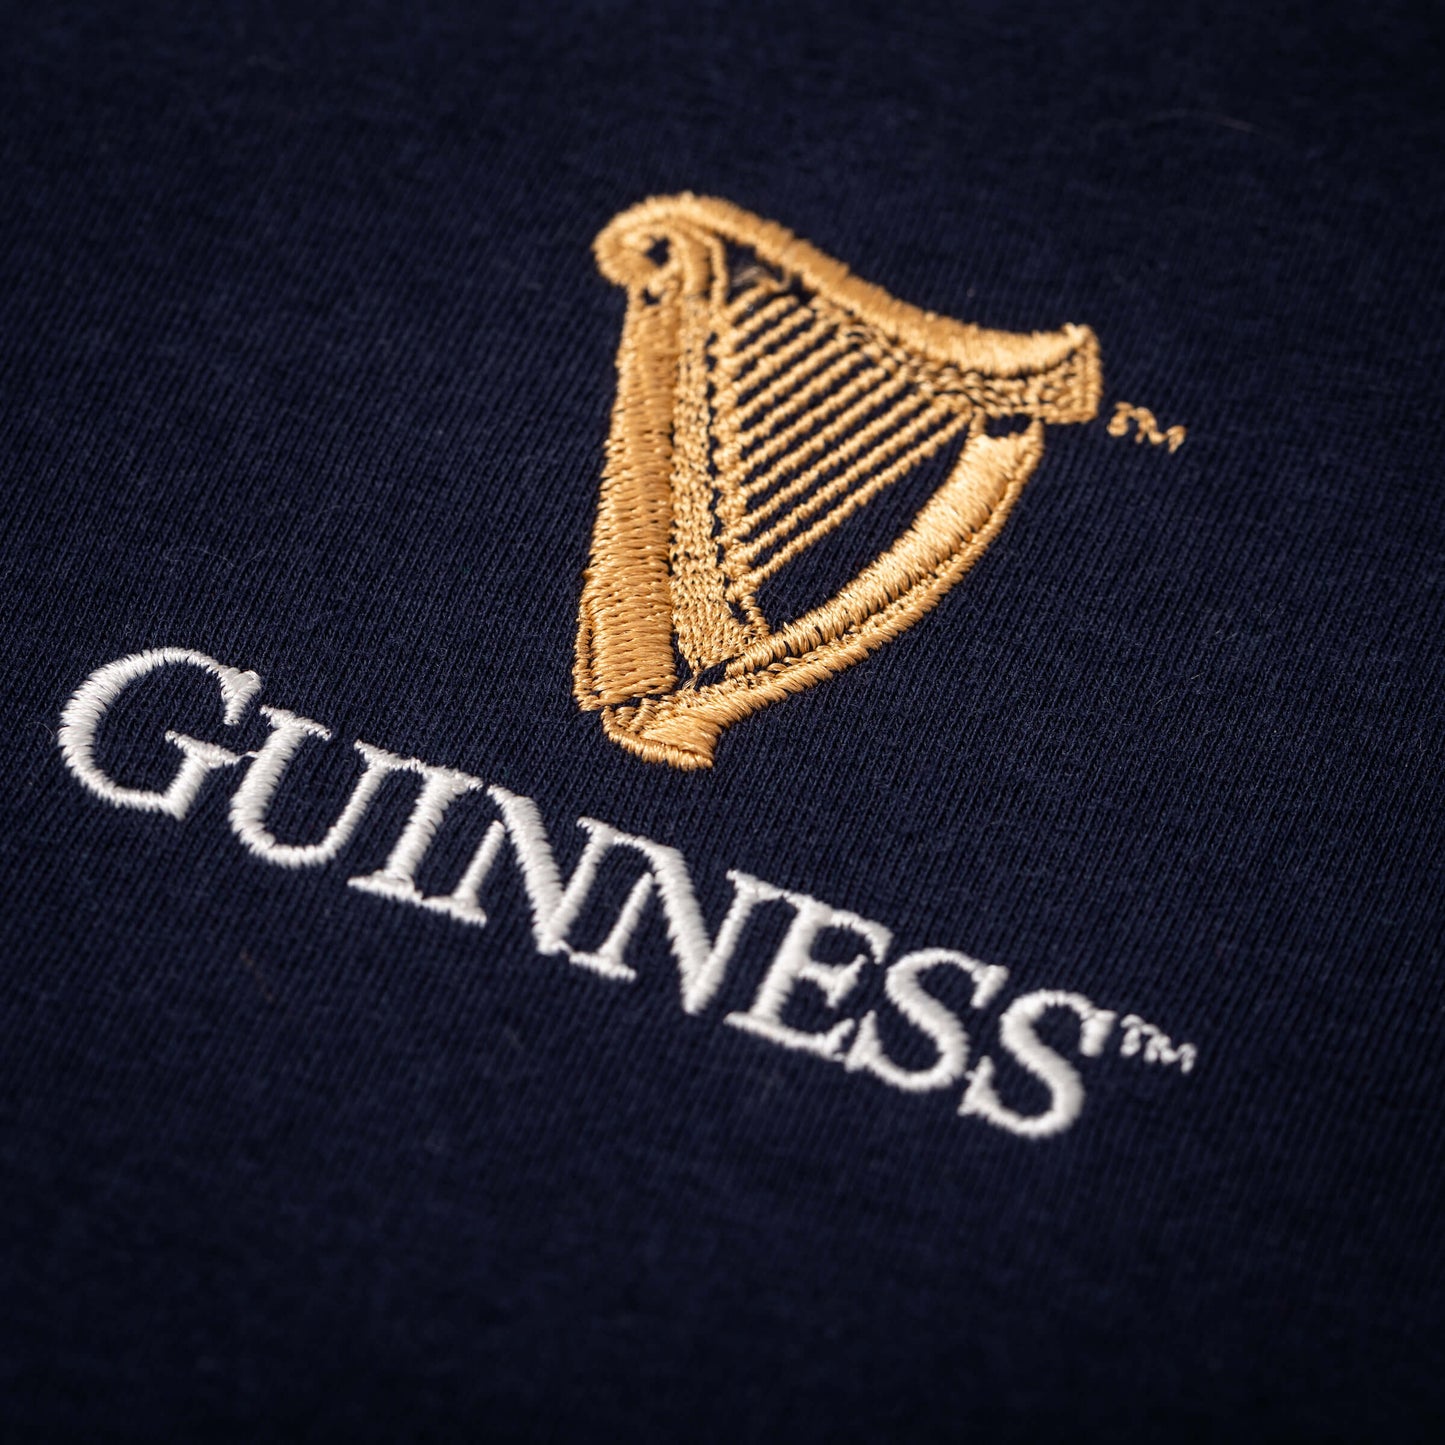 Guinness Notre Dame Go Irish Navy T-Shirt